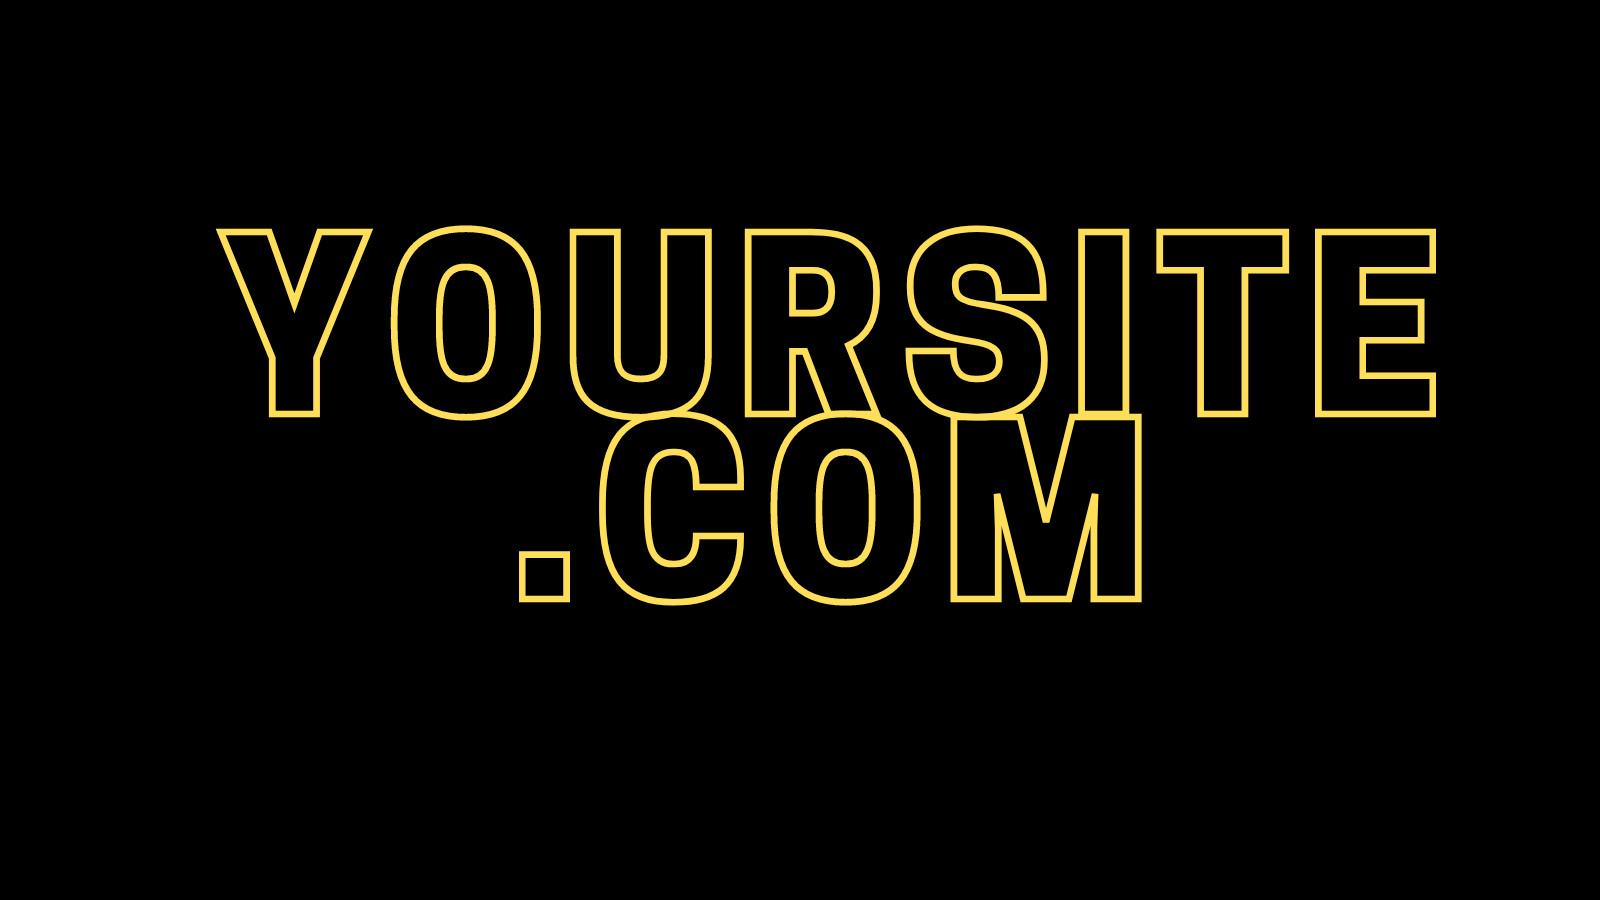 YOURSITE.COM in neon lettering